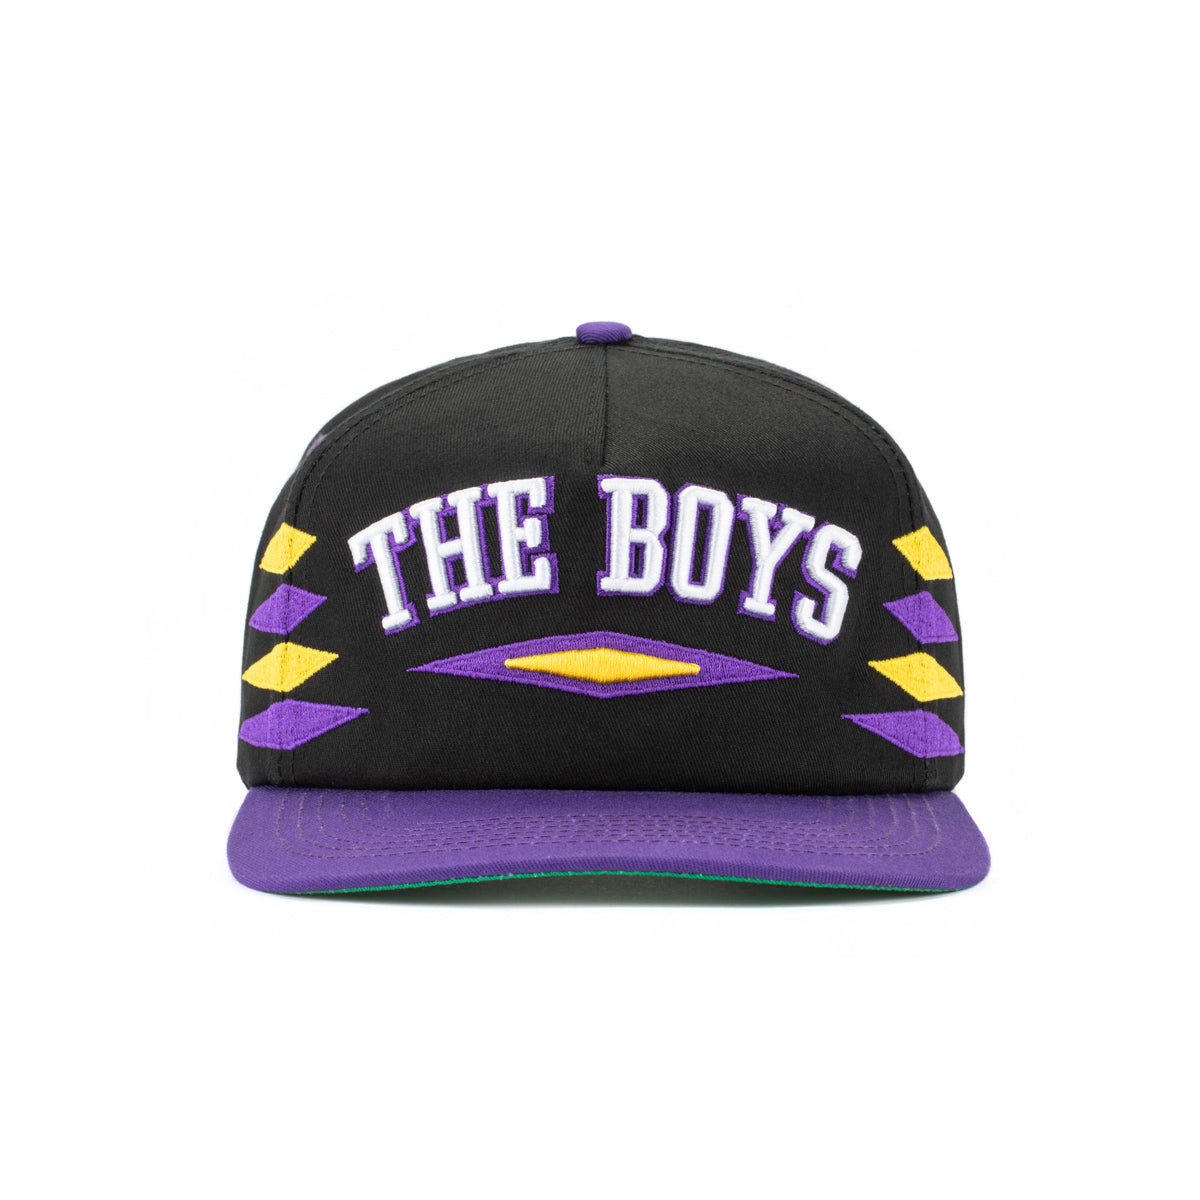 The Boys Diamond Retro Hat-Hats-Bussin With The Boys-Black/Purple-OS-Barstool Sports